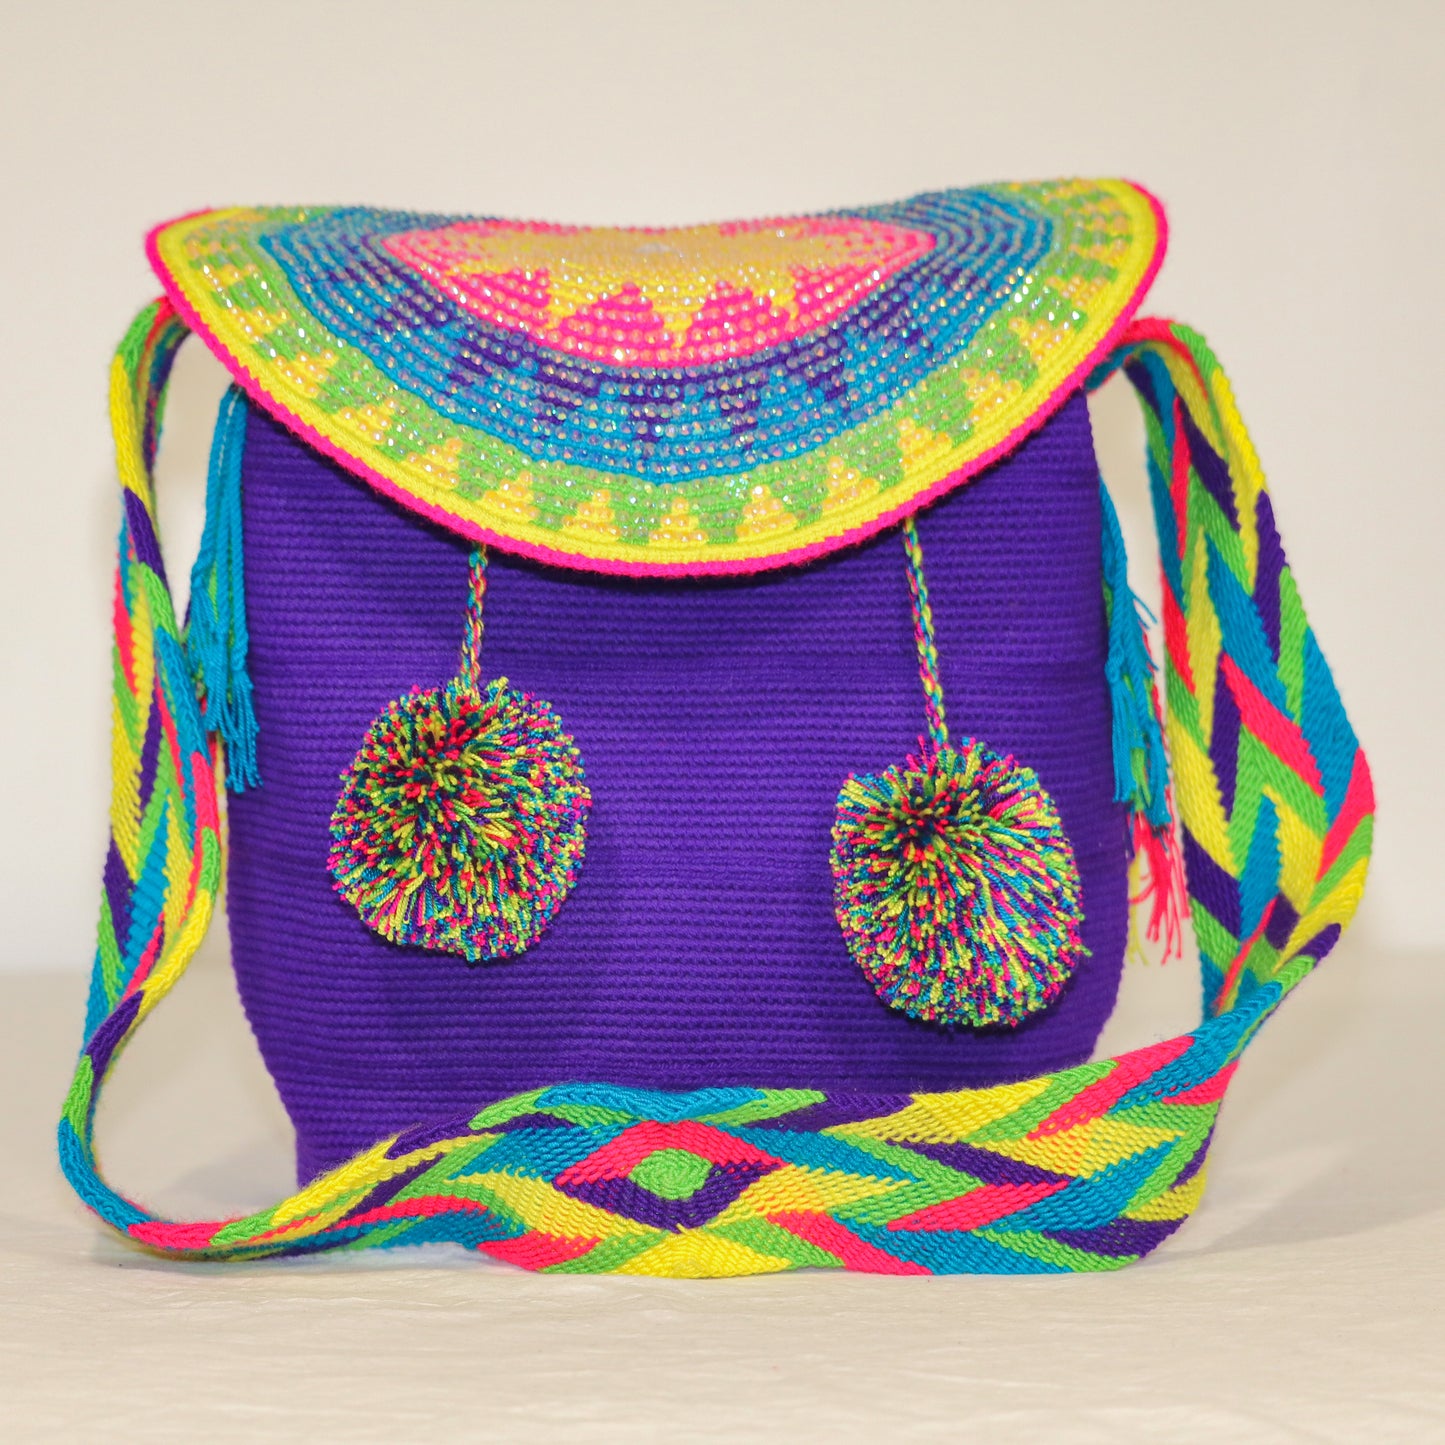 Handbag / Backpack / Mochila with lid, stones and tassels